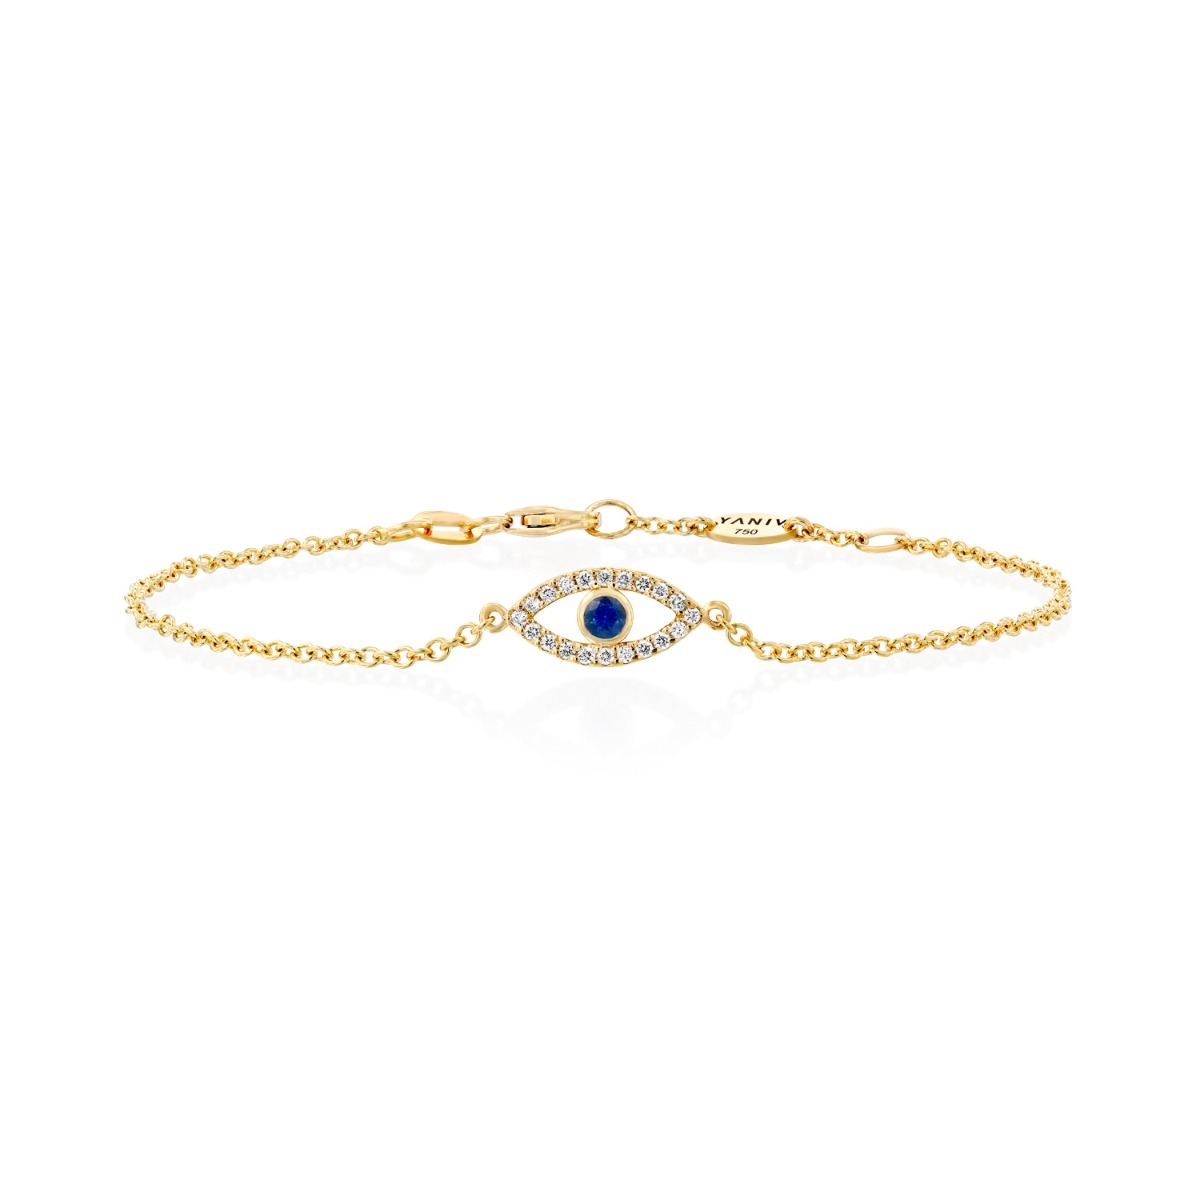 Yaniv Fine Jewelry 18K Gold Evil Eye Bracelet with Diamonds and Sapphire - 1